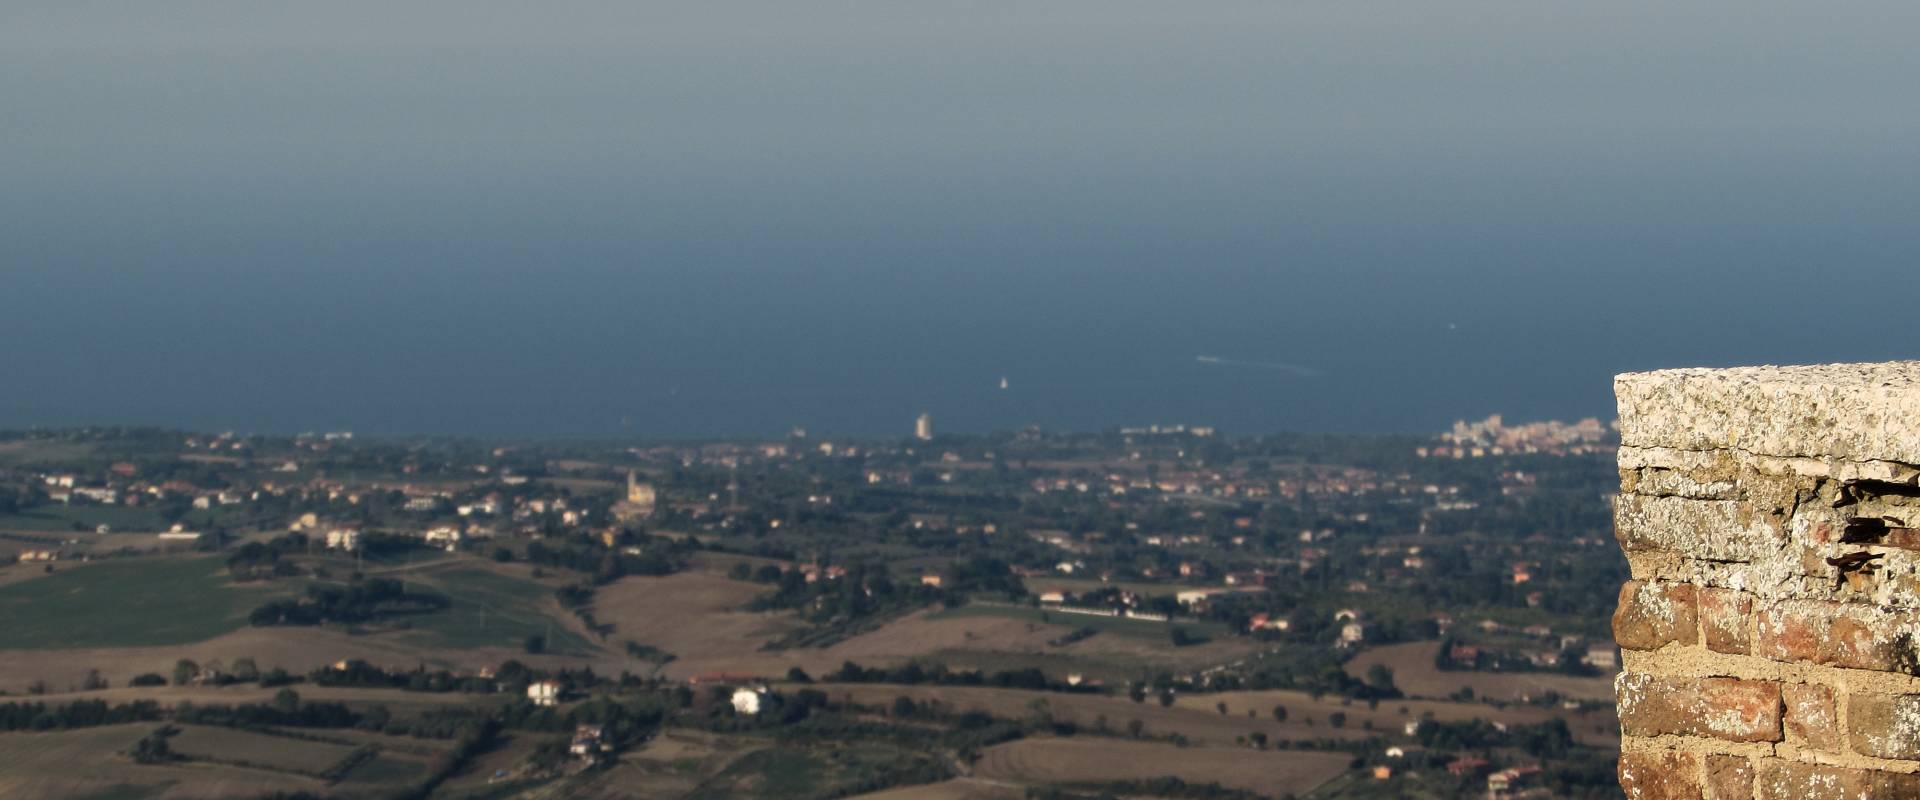 Panorama dalla Rocca photo by Larabraga19